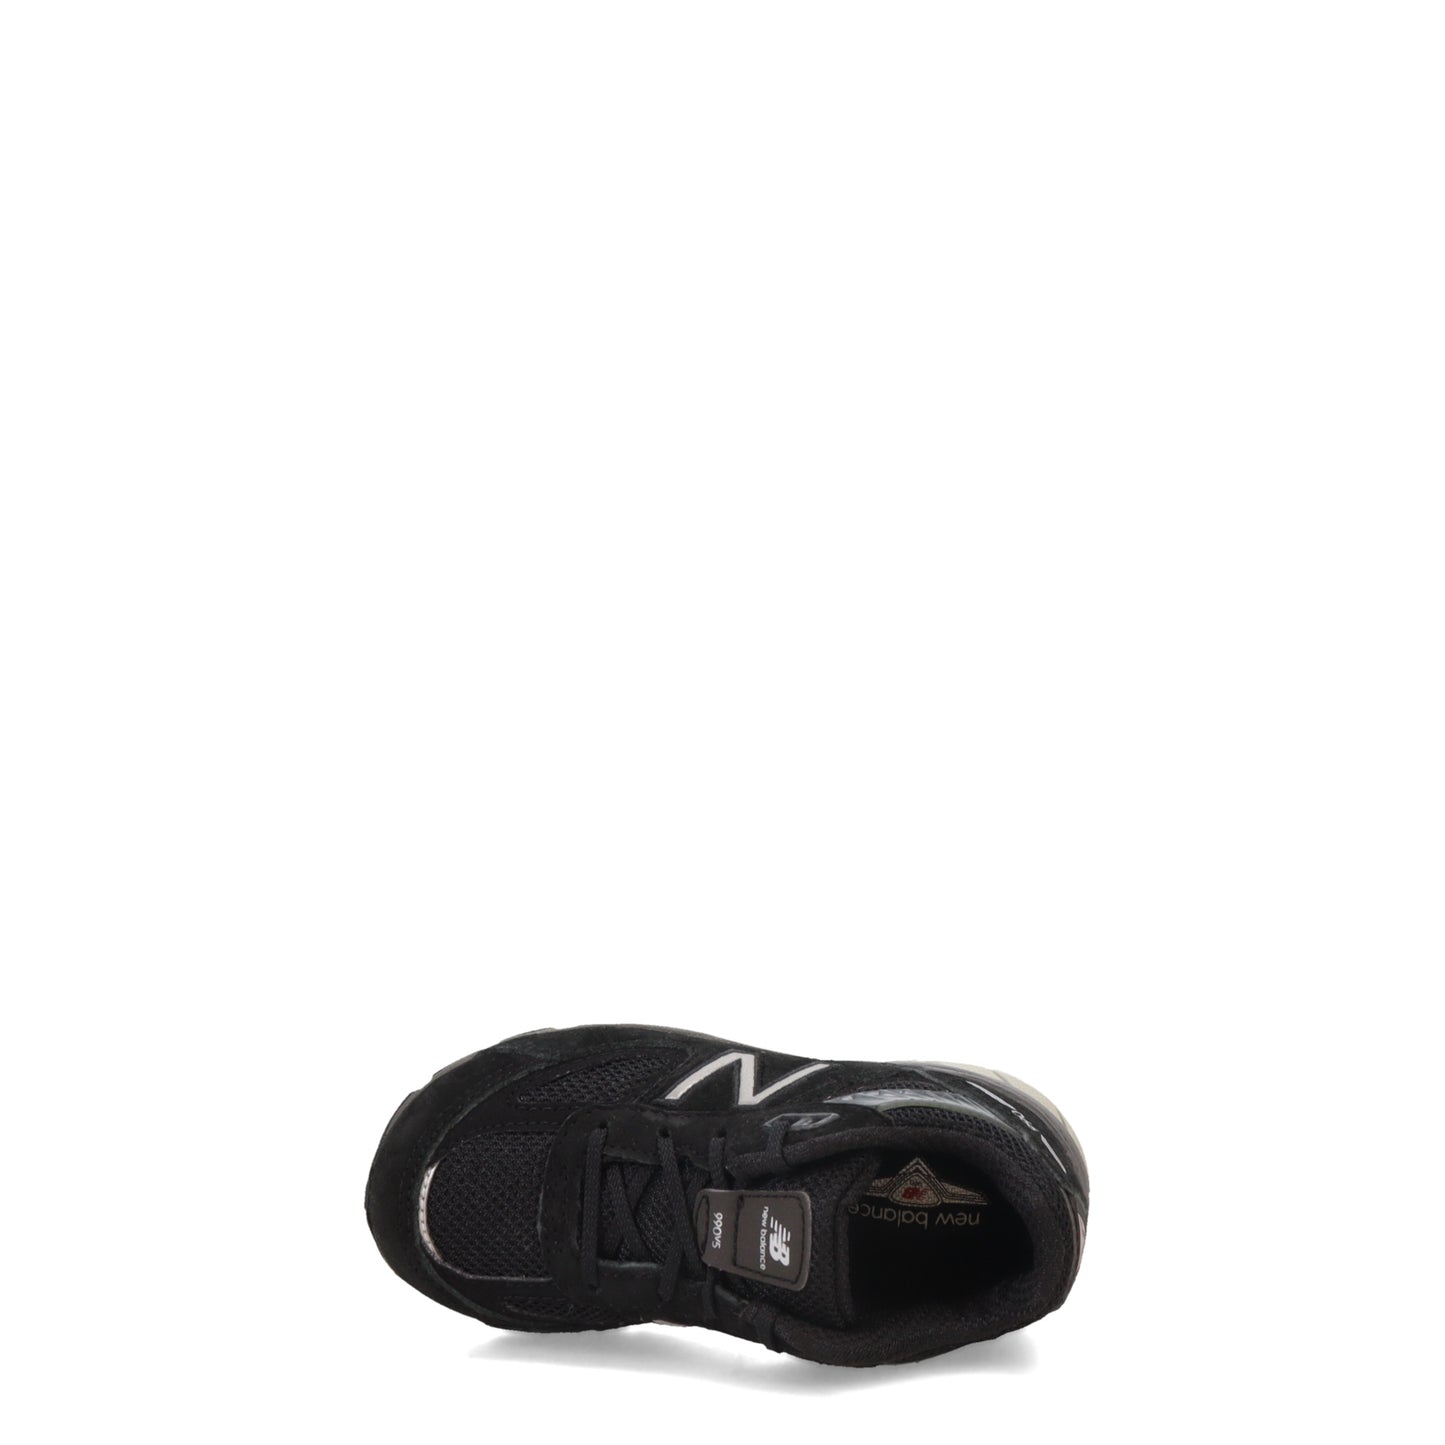 Peltz Shoes  Boy's New Balance 990v5 Sneaker - Toddler Black IC990BK5